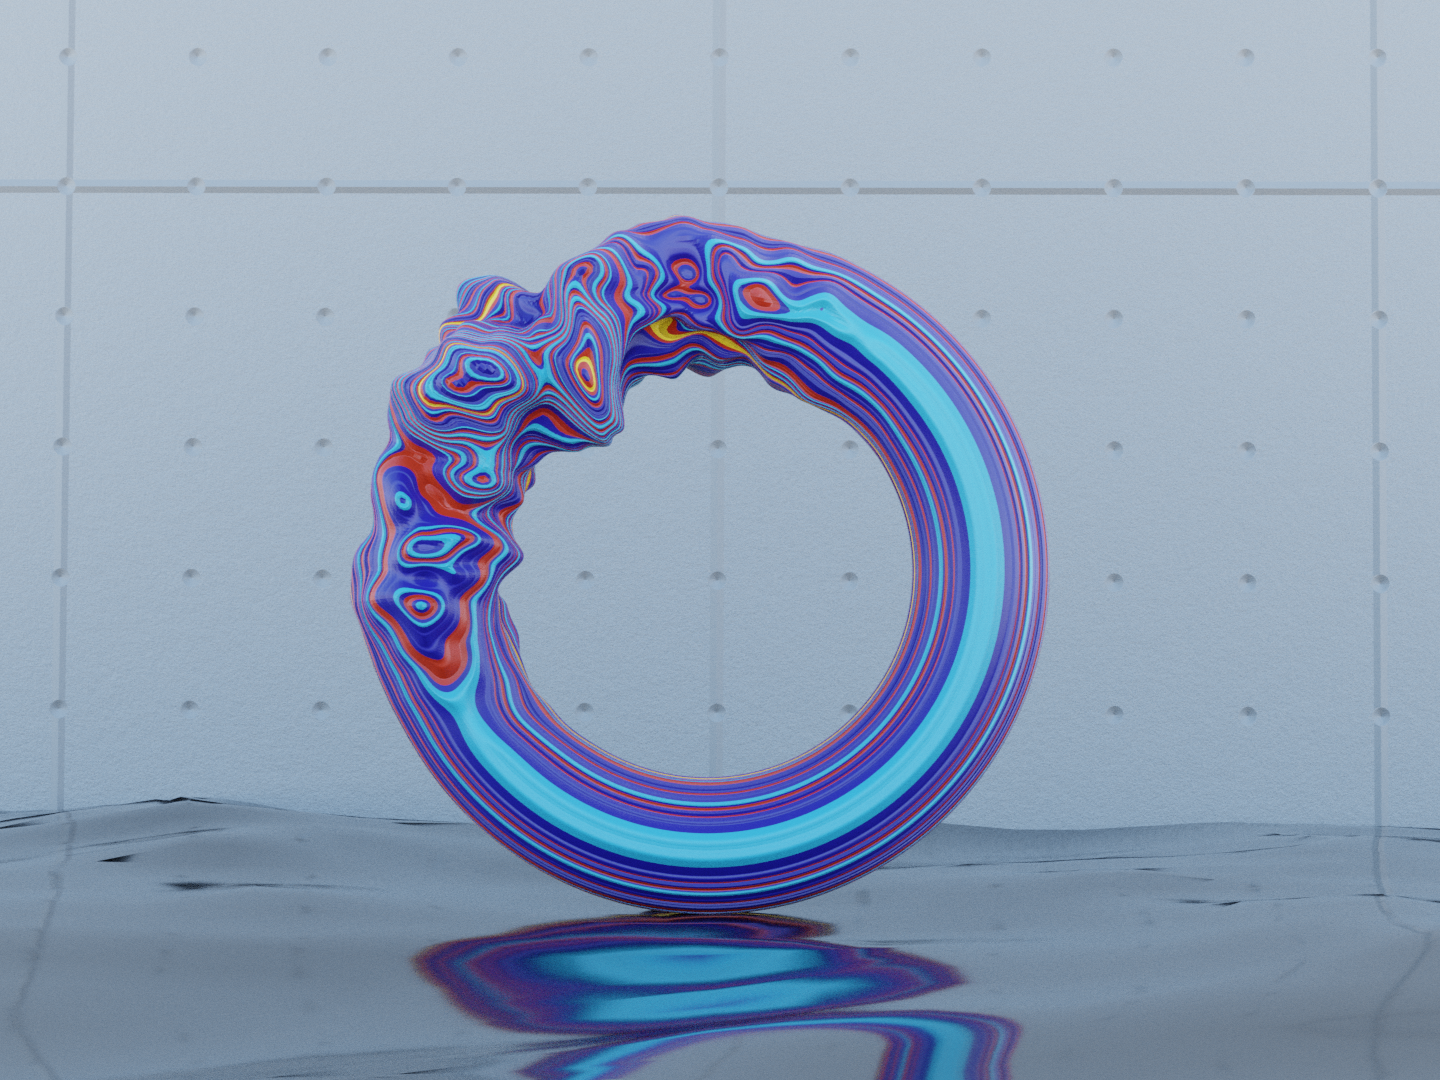 Generative torus, 2021. Digital art made with Blender.